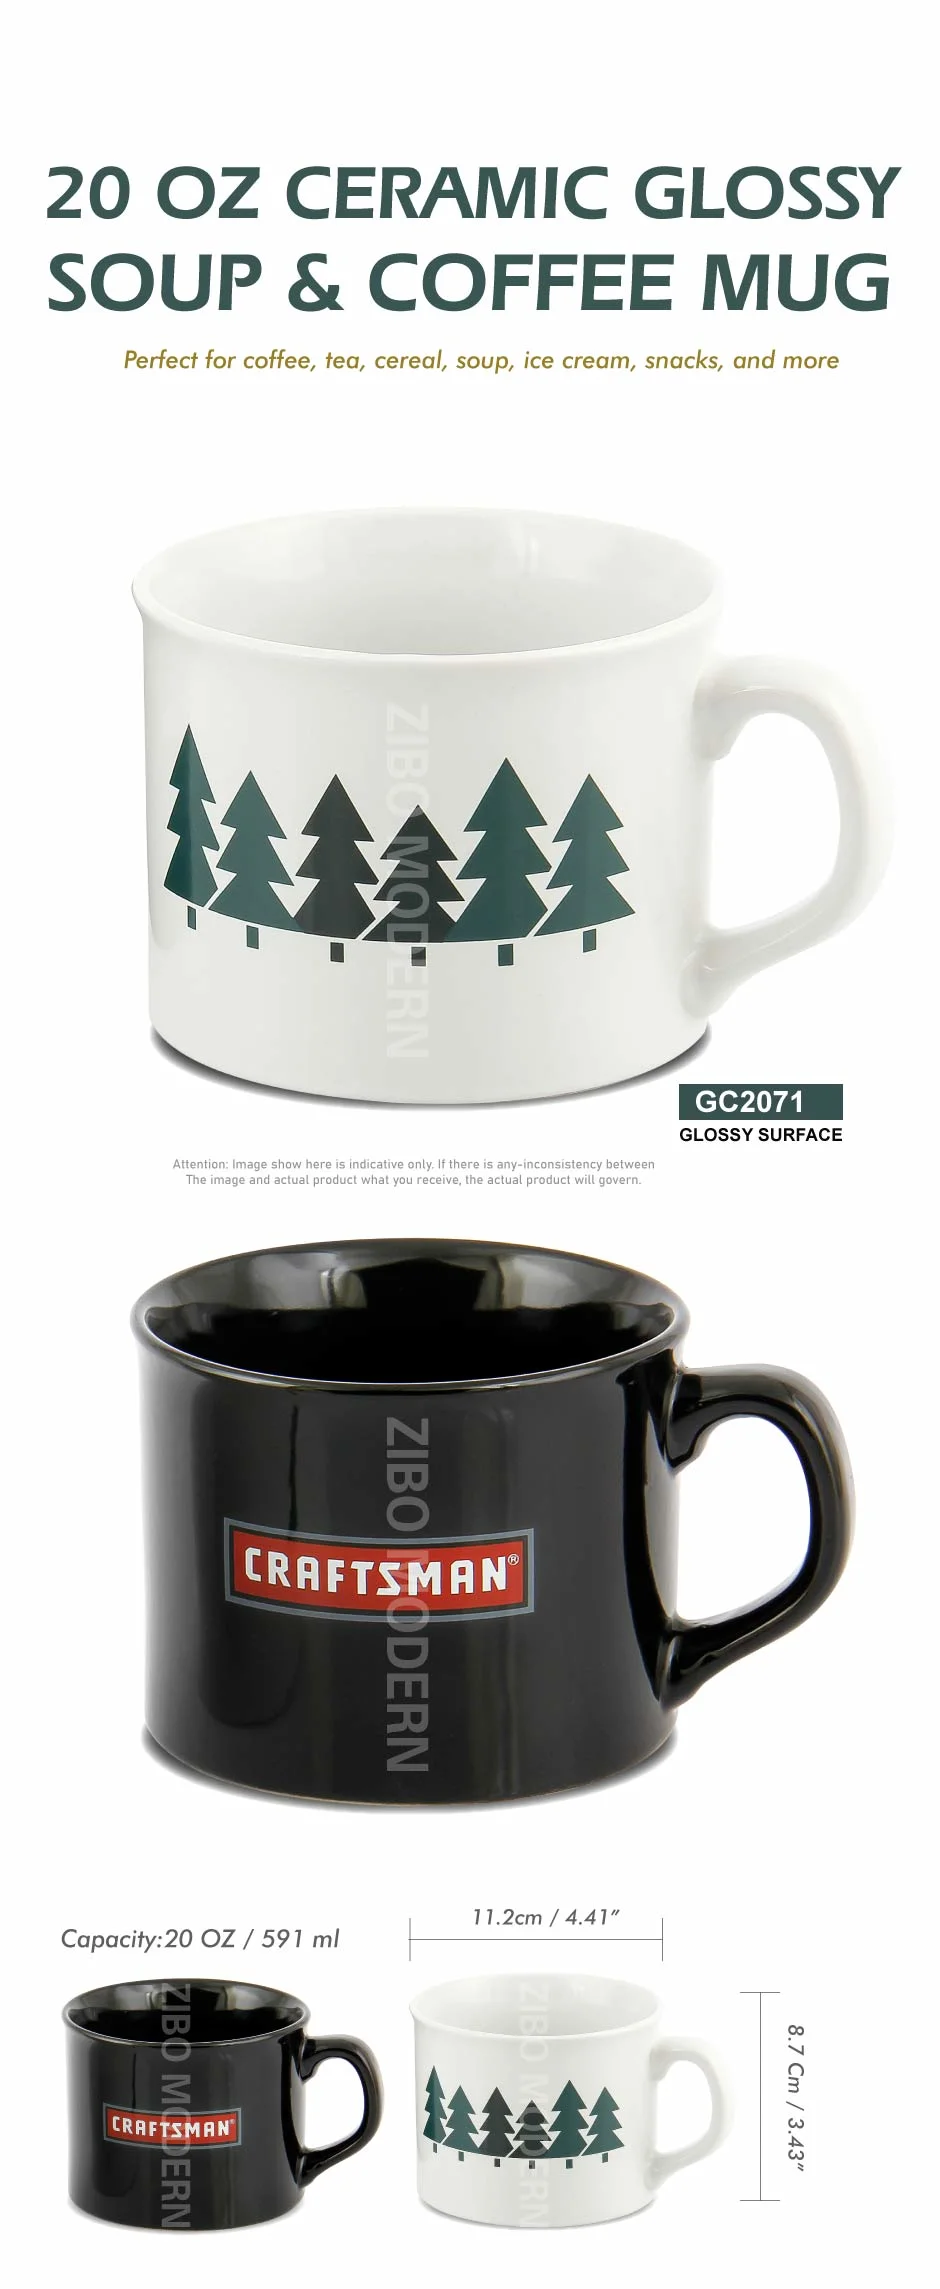 20 Oz Ceramic Glossy Soup & Coffee Mug - Porcelain Coffee/Tea Mug, Stoneware